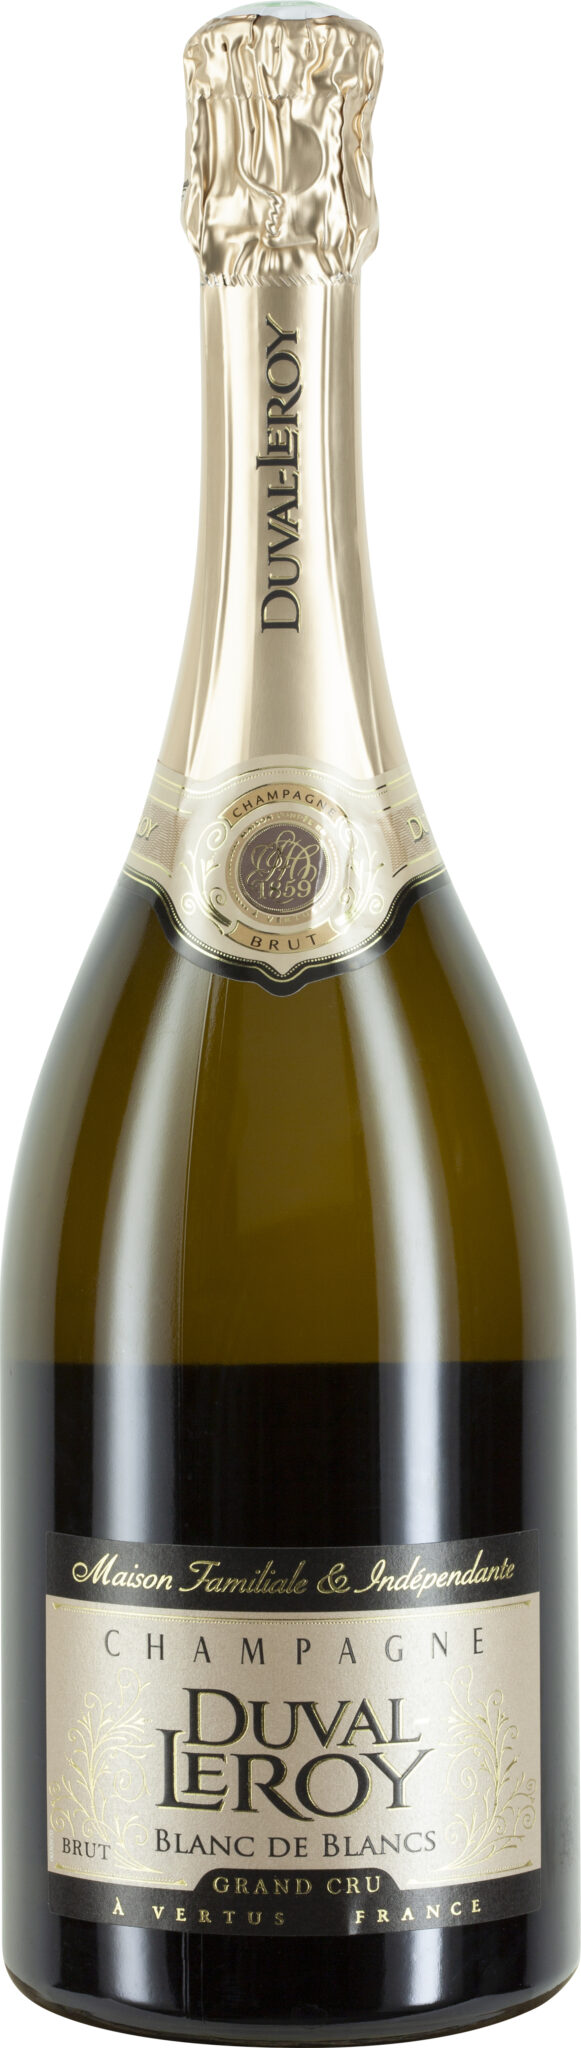 Duval-Leroy Prestige, Champagne Brut Blanc de Blancs Grand Cru